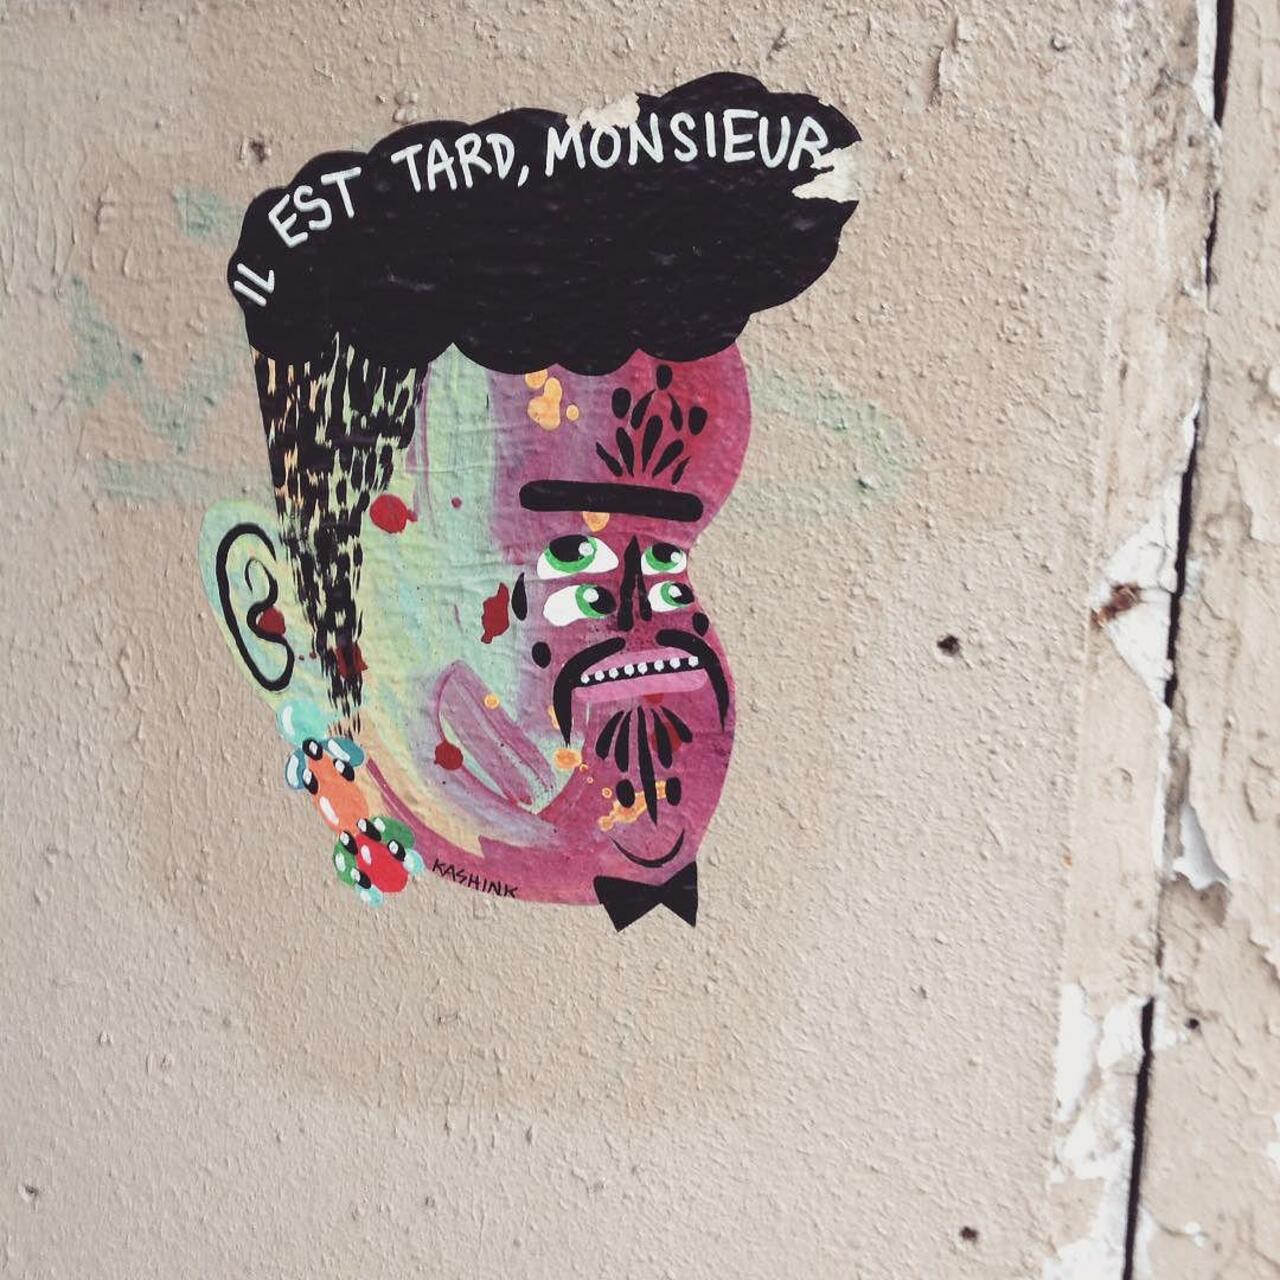 http://ift.tt/1KiqpQt #Paris #graffiti photo by stefetlinda http://ift.tt/1KiOp2m #StreetArt https://t.co/atDCsvF1DZ